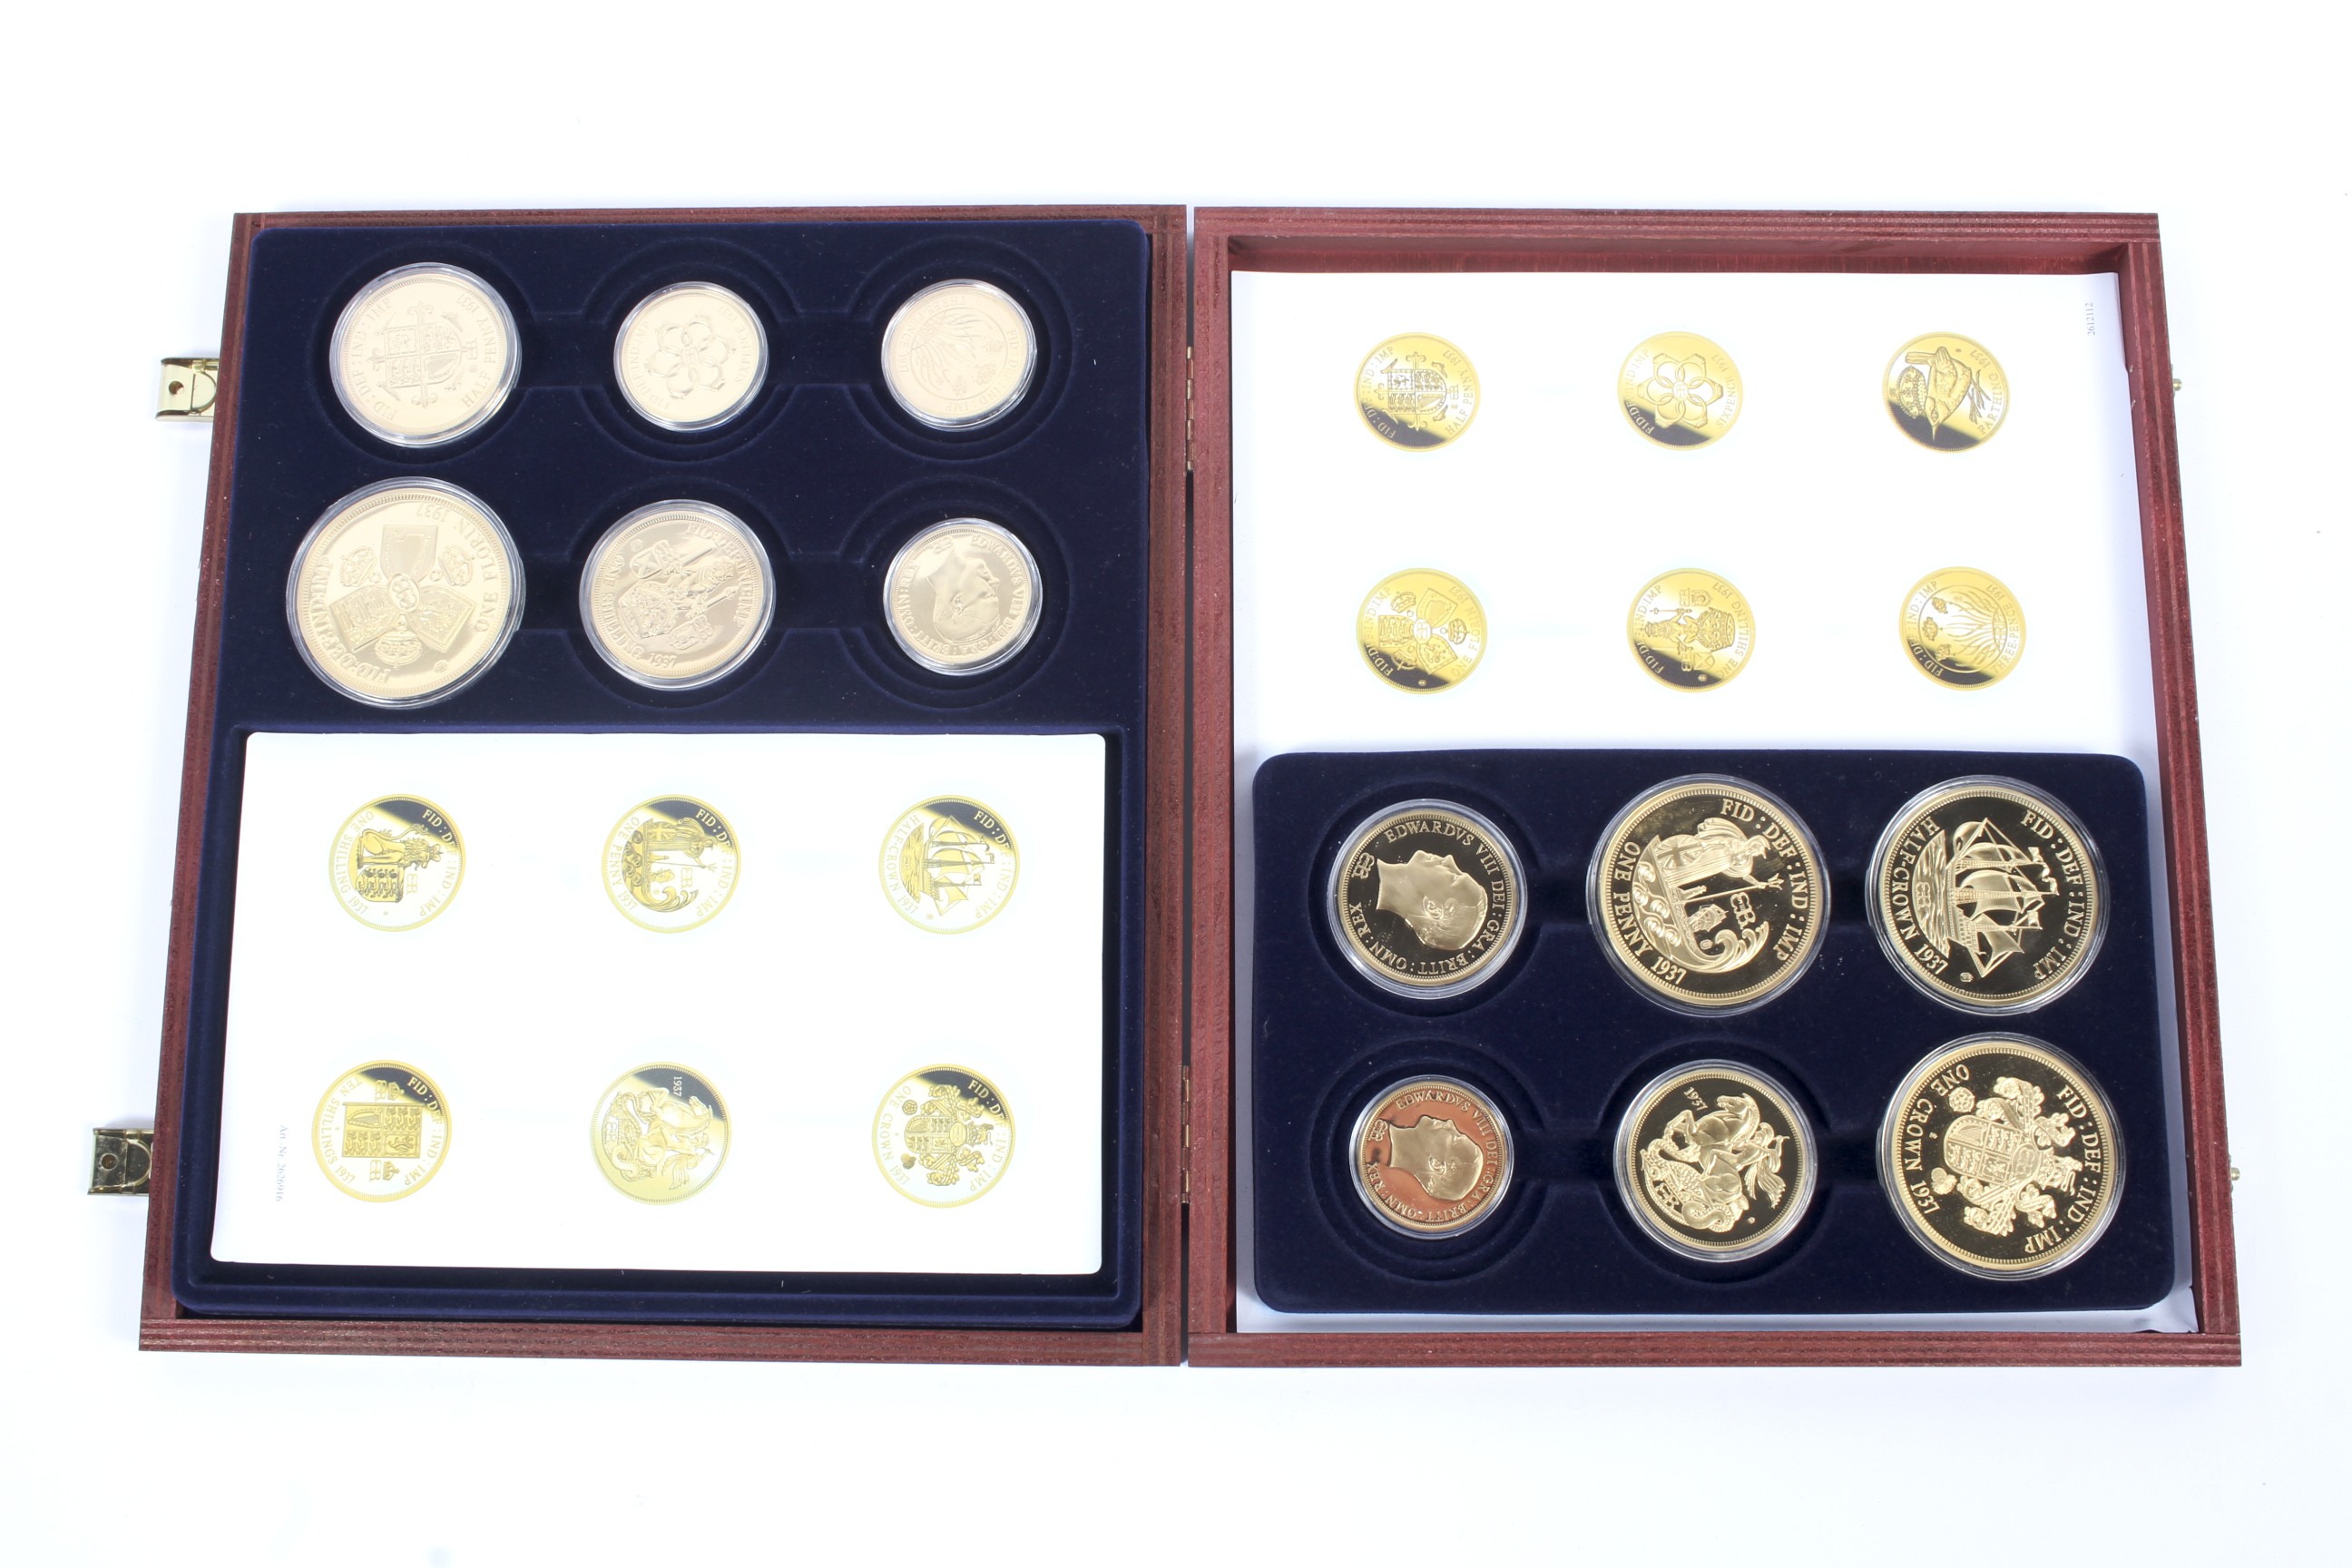 A fantasy set of twelve Edward VIII coin